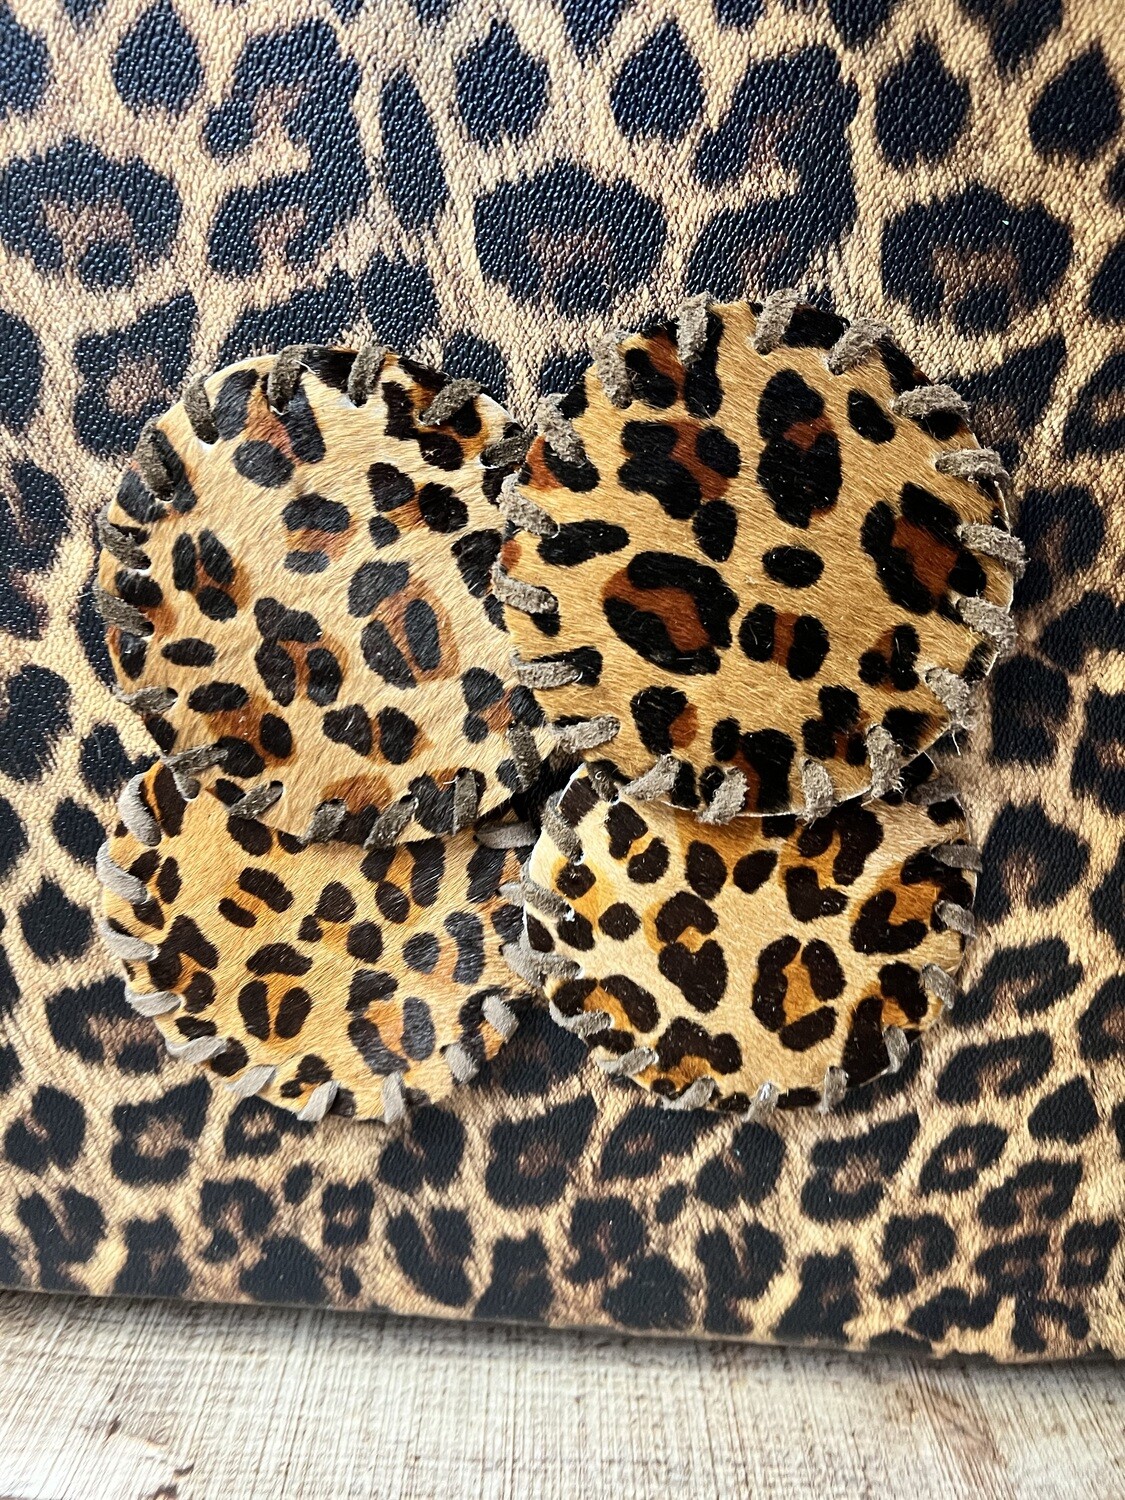 Leopard Hide Coaster Set of 4 Decor